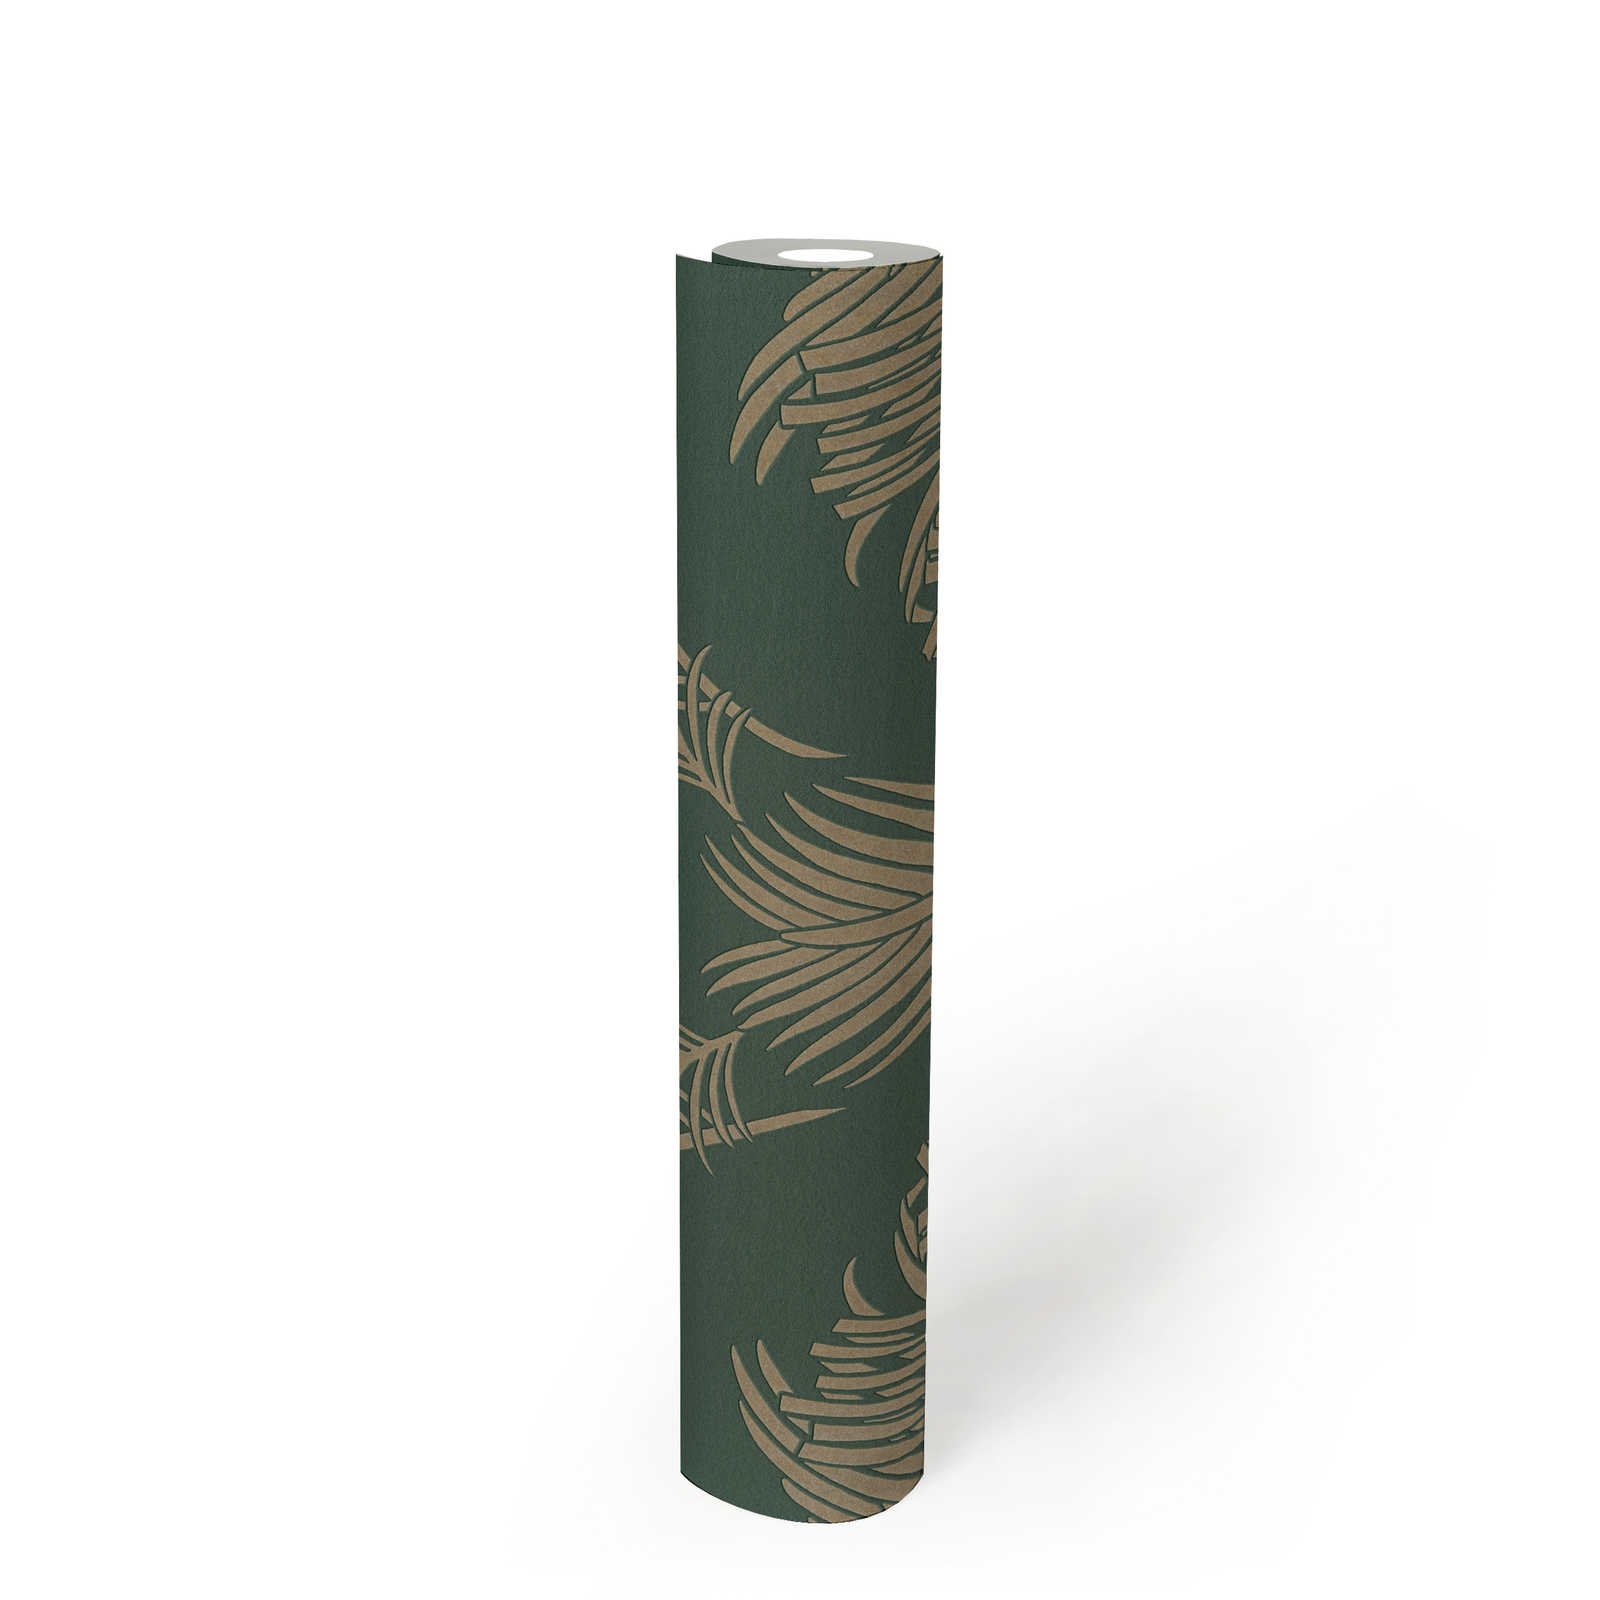             Vliestapete Tannengrün & Gold mit Palmblatt Motiv – Grün, Metallic
        